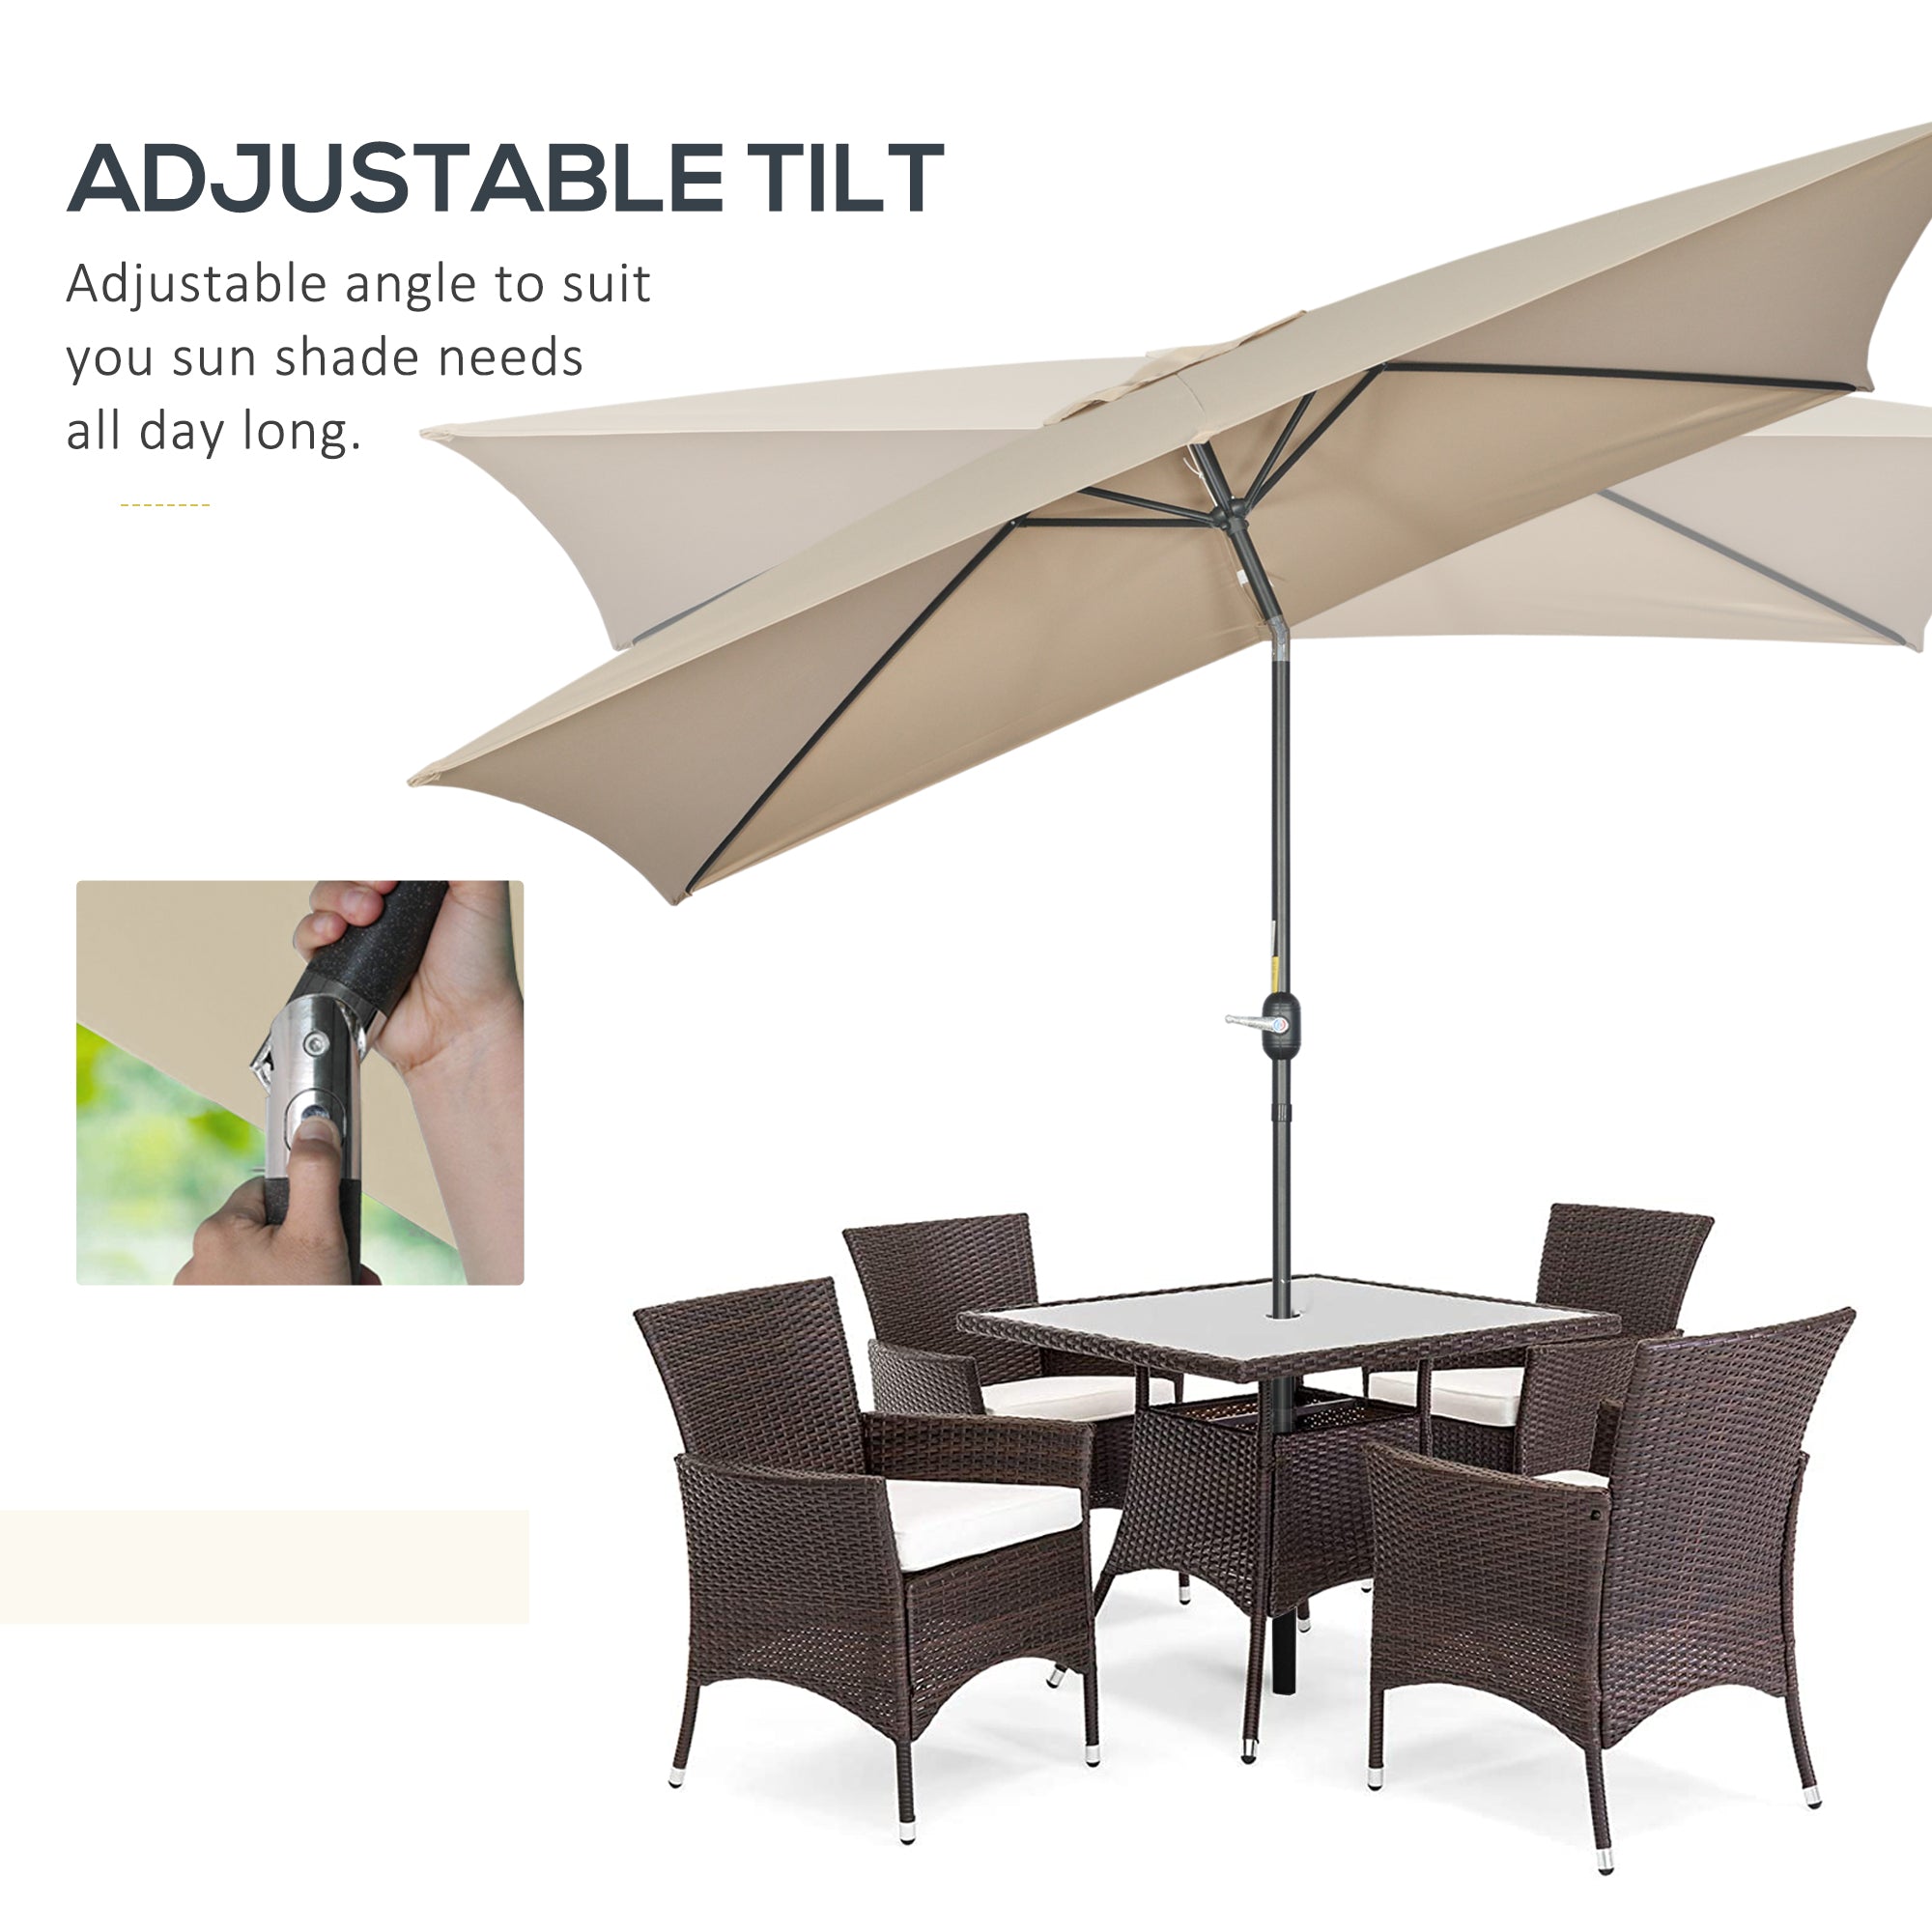 Outsunny 3x2m Patio Parasol Garden Umbrellas Canopy with Aluminum Tilt Crank Rectangular Sun Shade Steel, Khaki